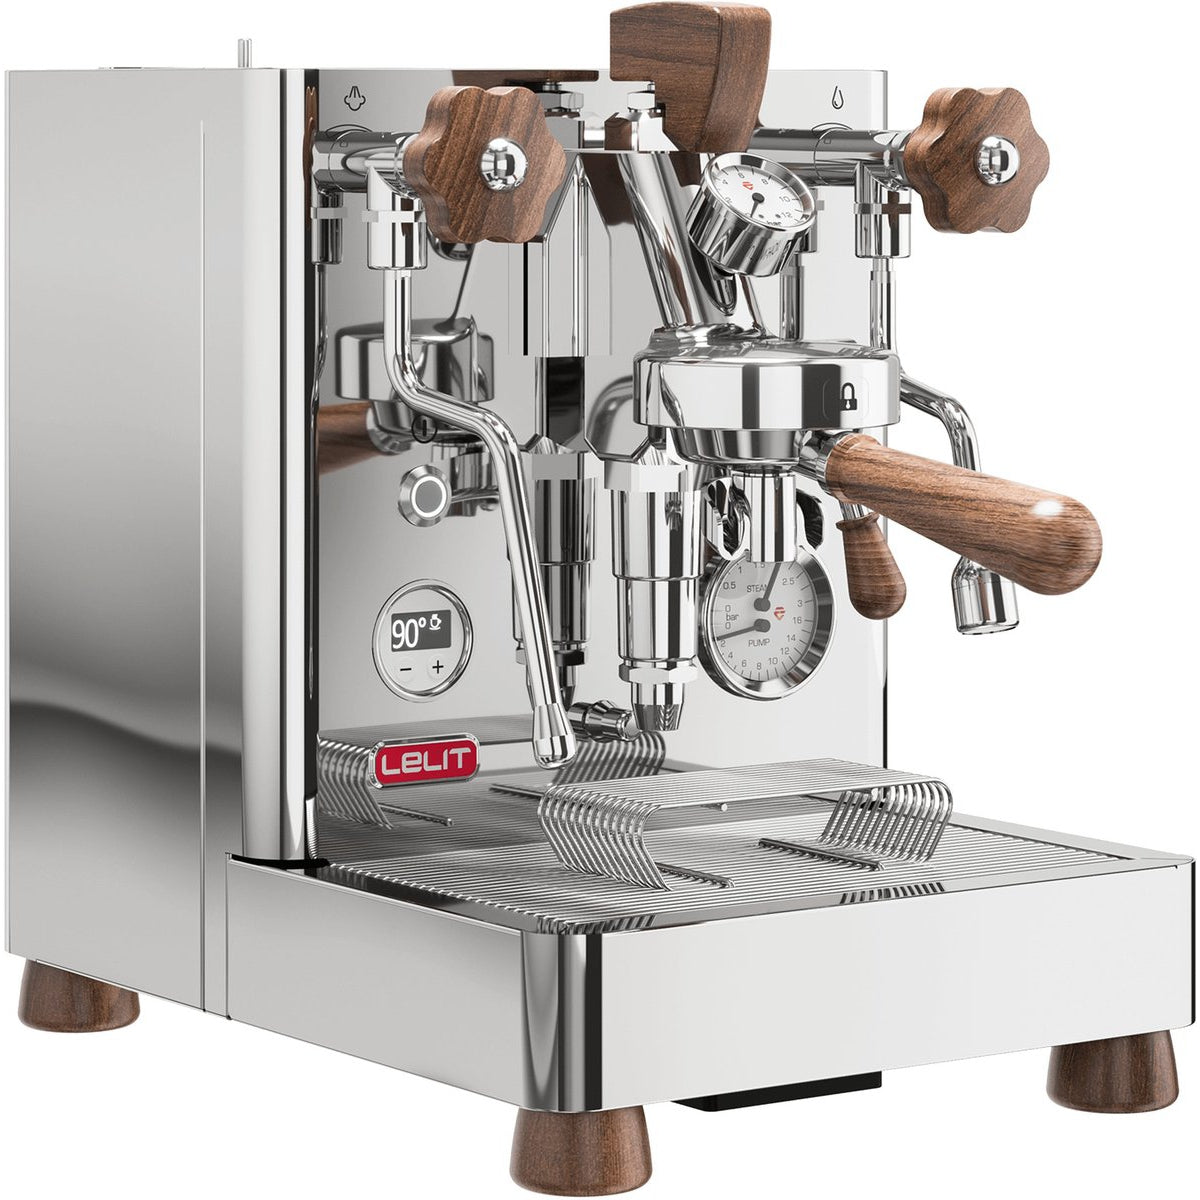 Lelit Bianca V2 Espresso Machine